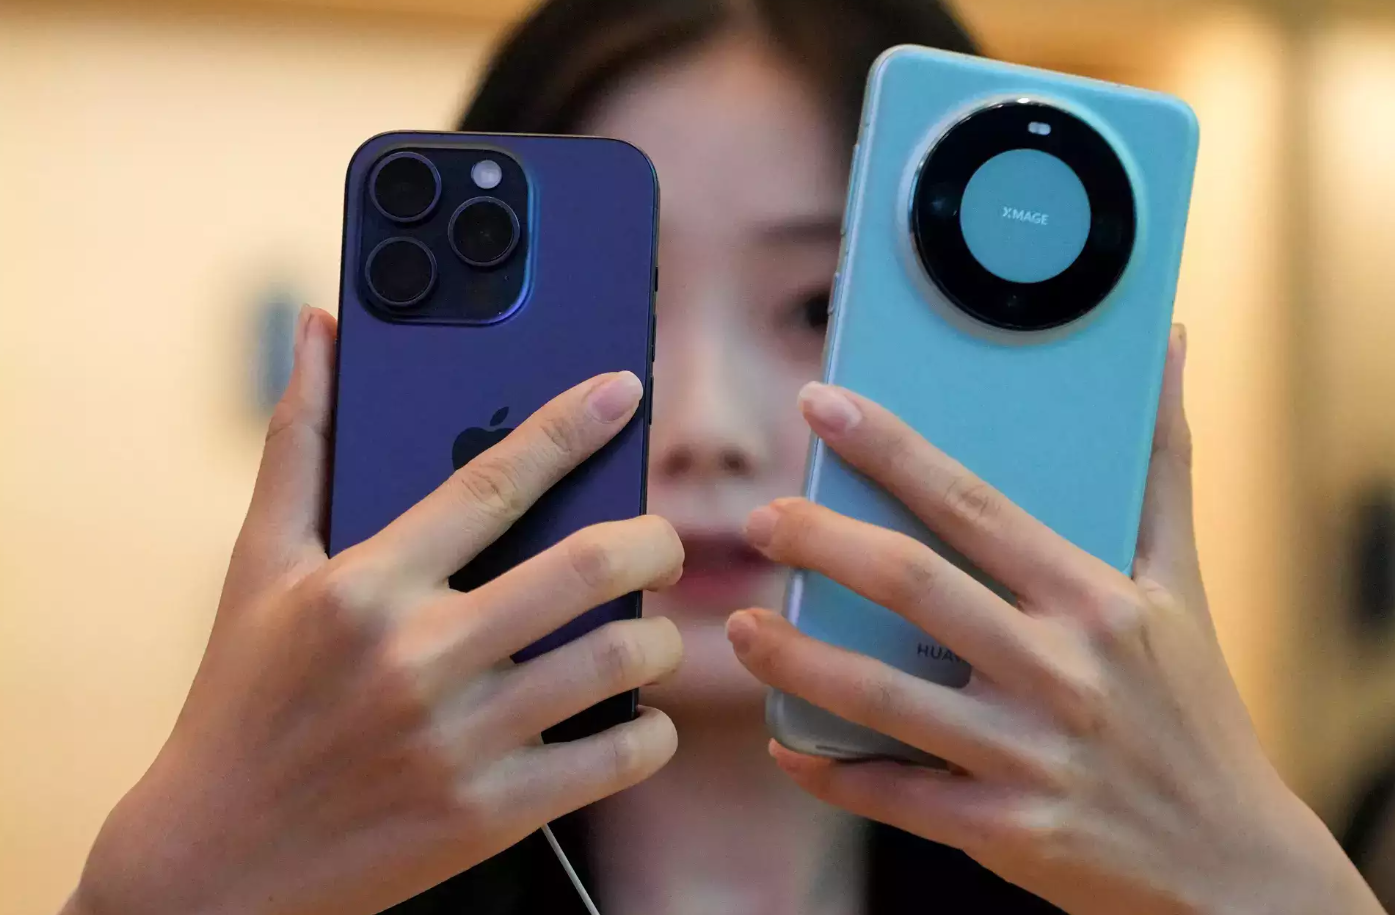 Apple iPhone Shipments in China Drop 24% Amid Huawei's Resurgence